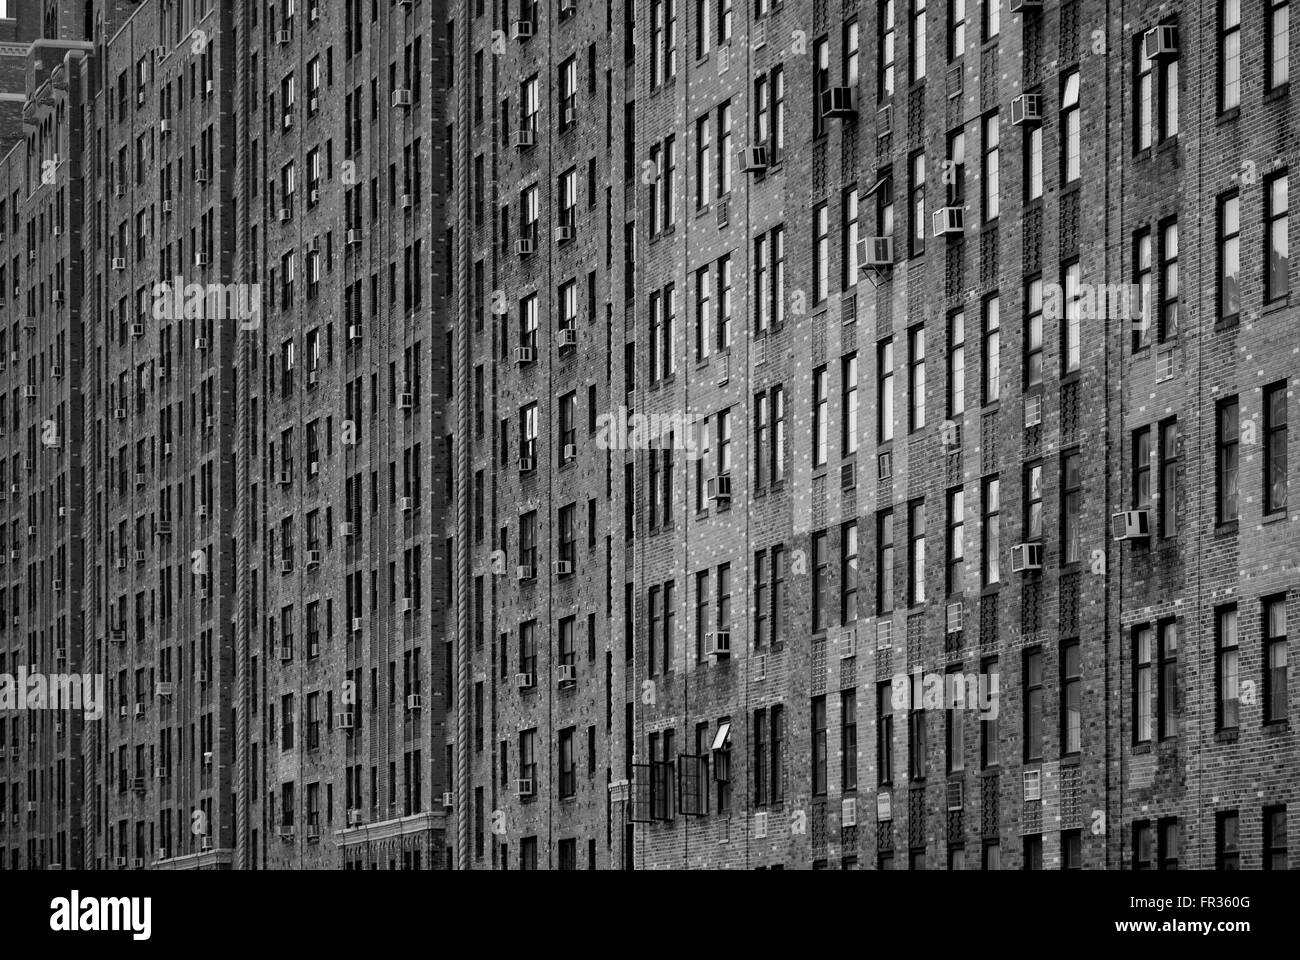 London Terrace Gardens, appartements, bureaux, 435 West 23rd Street New York City, USA. Banque D'Images